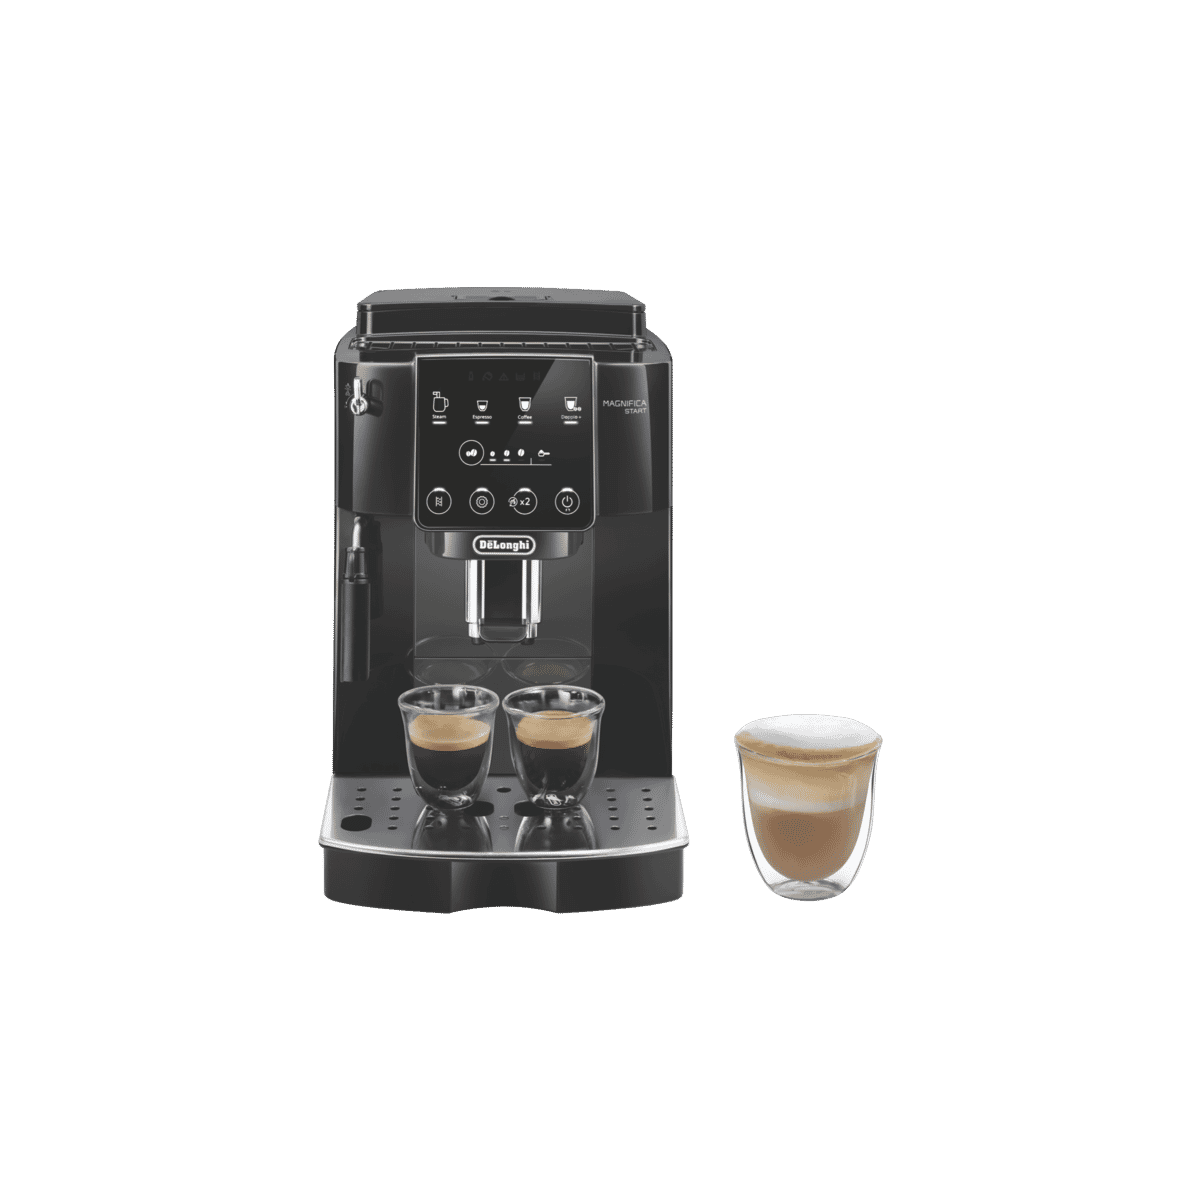 DeLonghi ECAM22021BG Magnifica Start Coffee Machine at The Good Guys